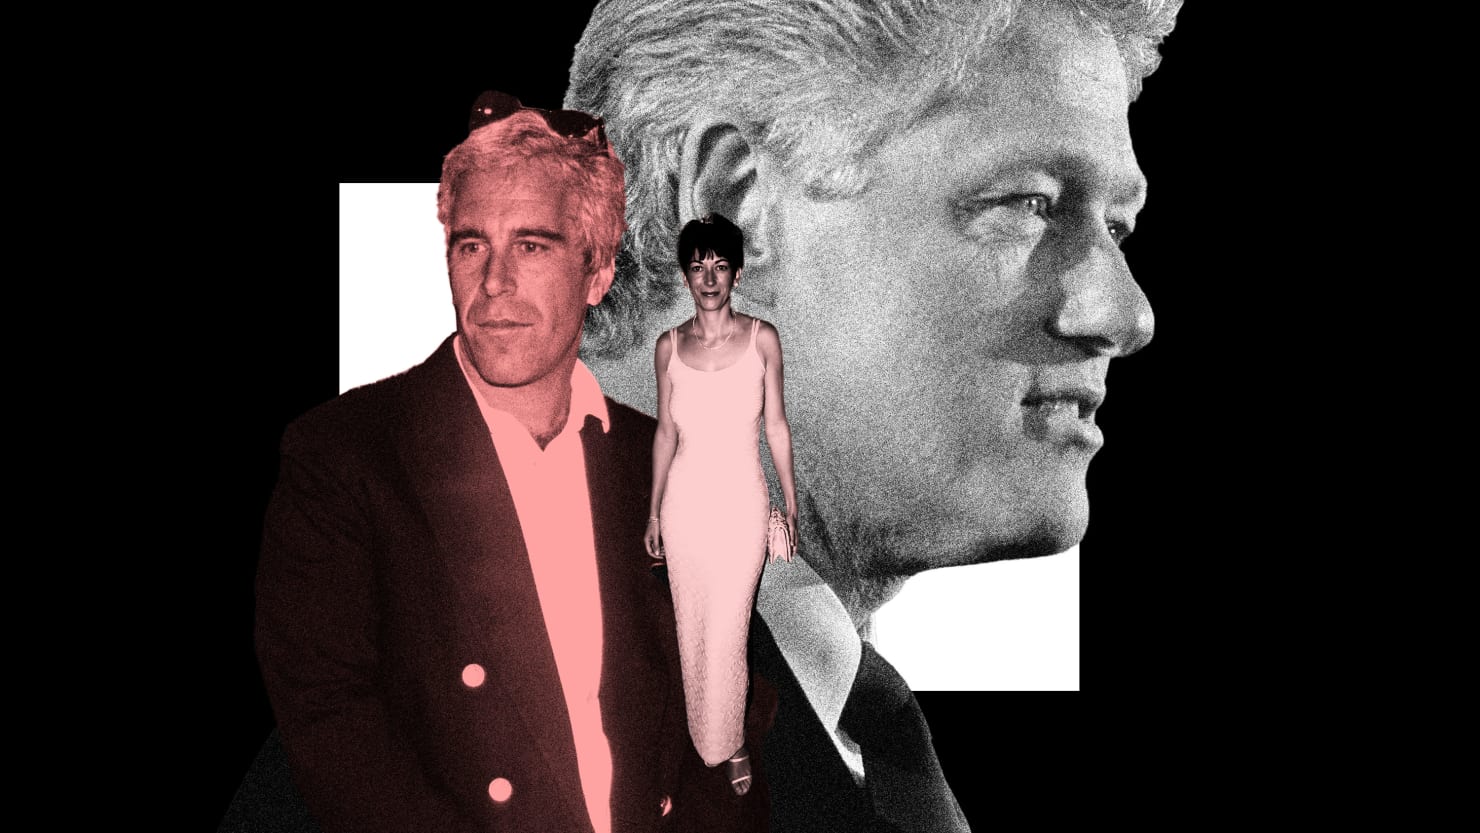 Glitzy Pics of Clinton, Epstein and Ghislaine Resurface